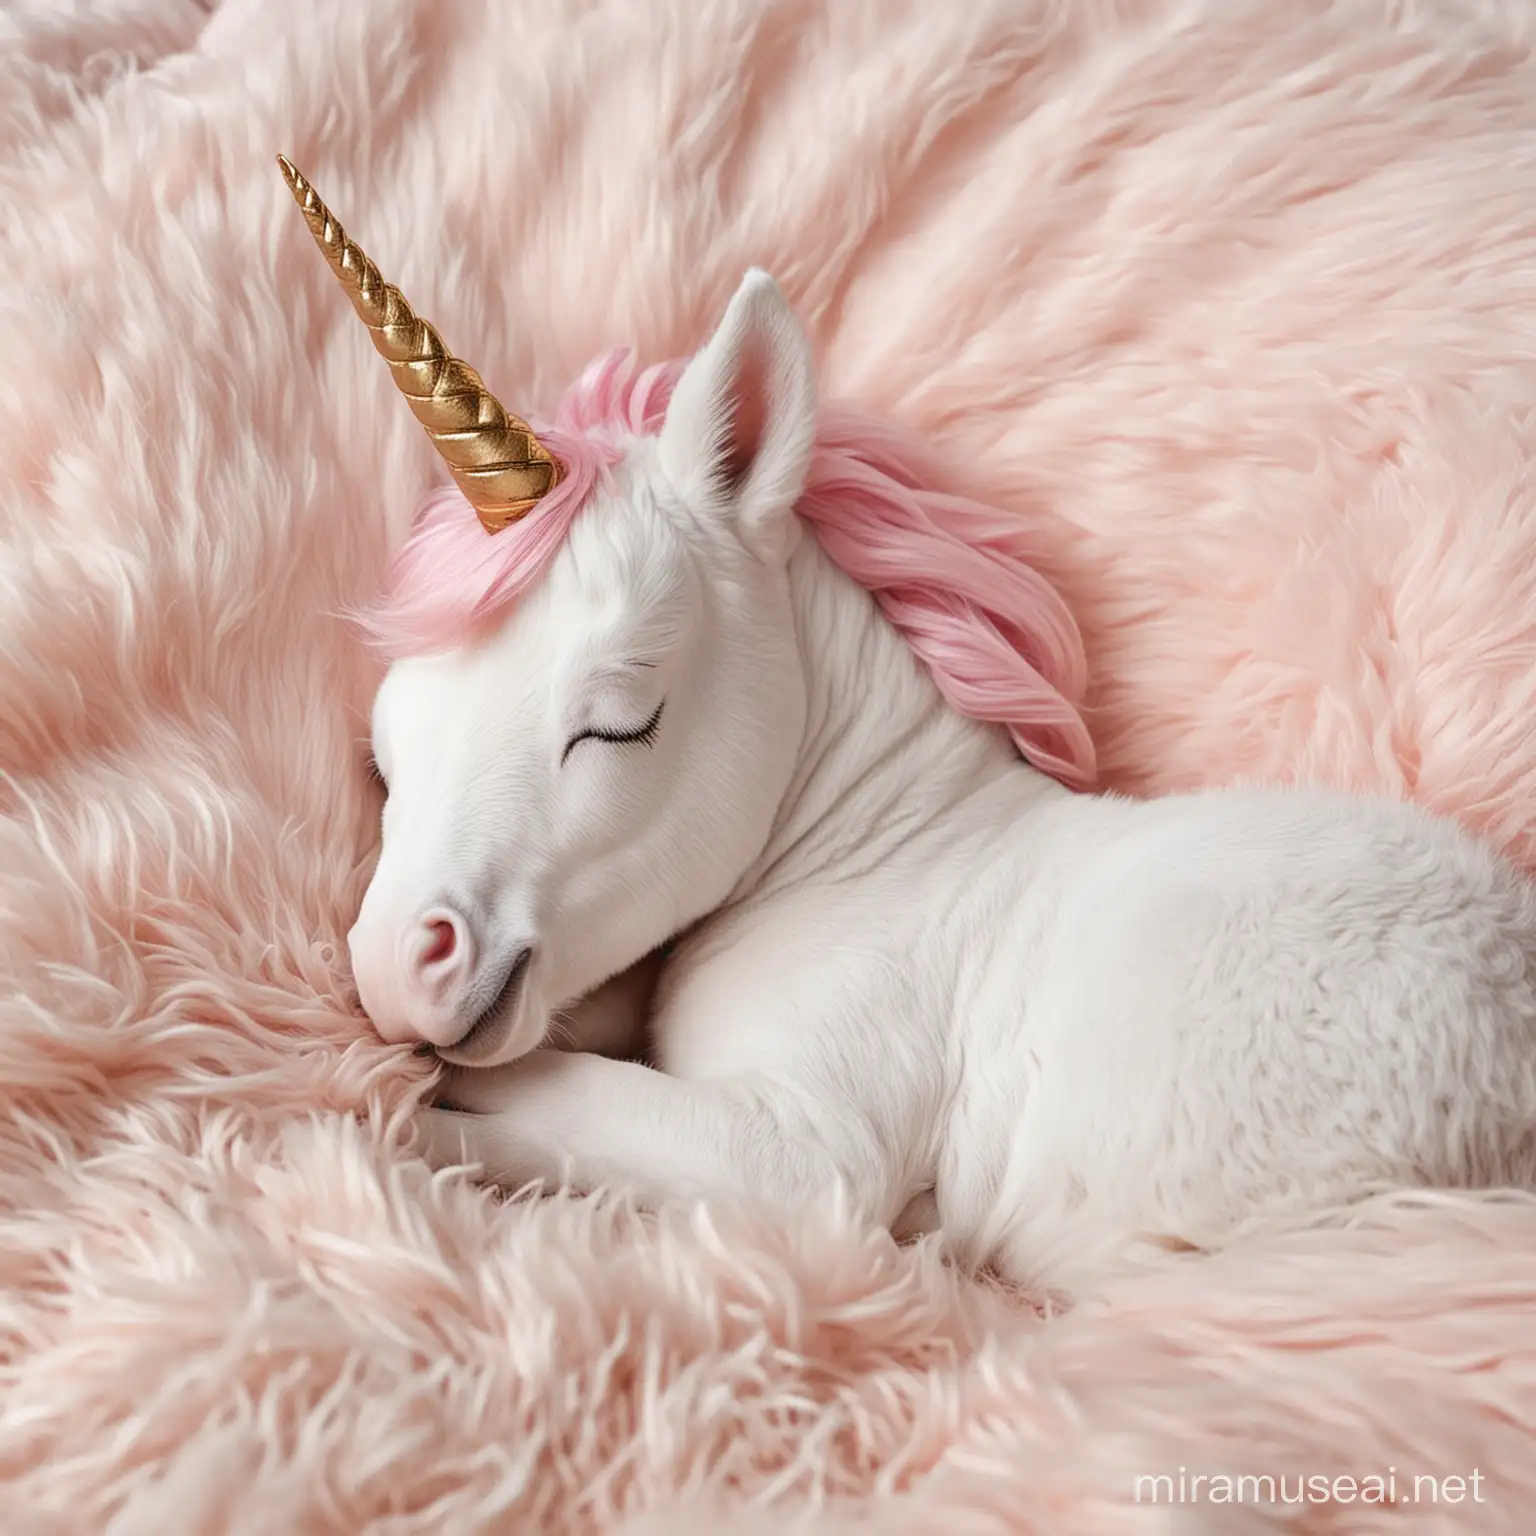 A baby unicorn sleeping peacefully 